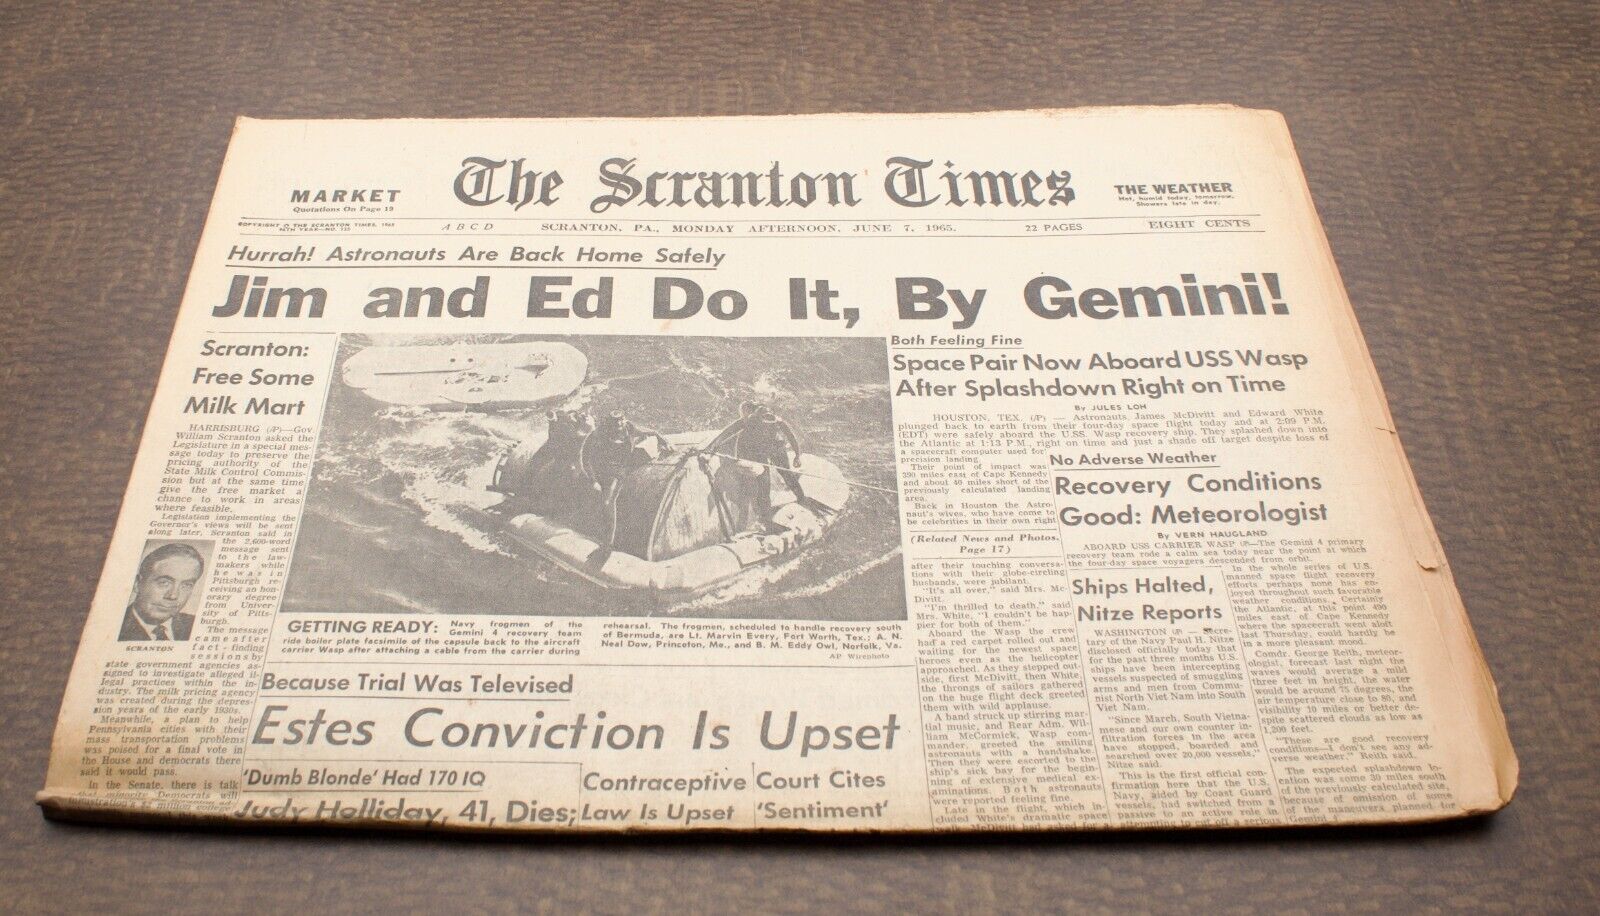 The Scranton Times Gemini 4 June 7, 1965 Jim and Ed Do It